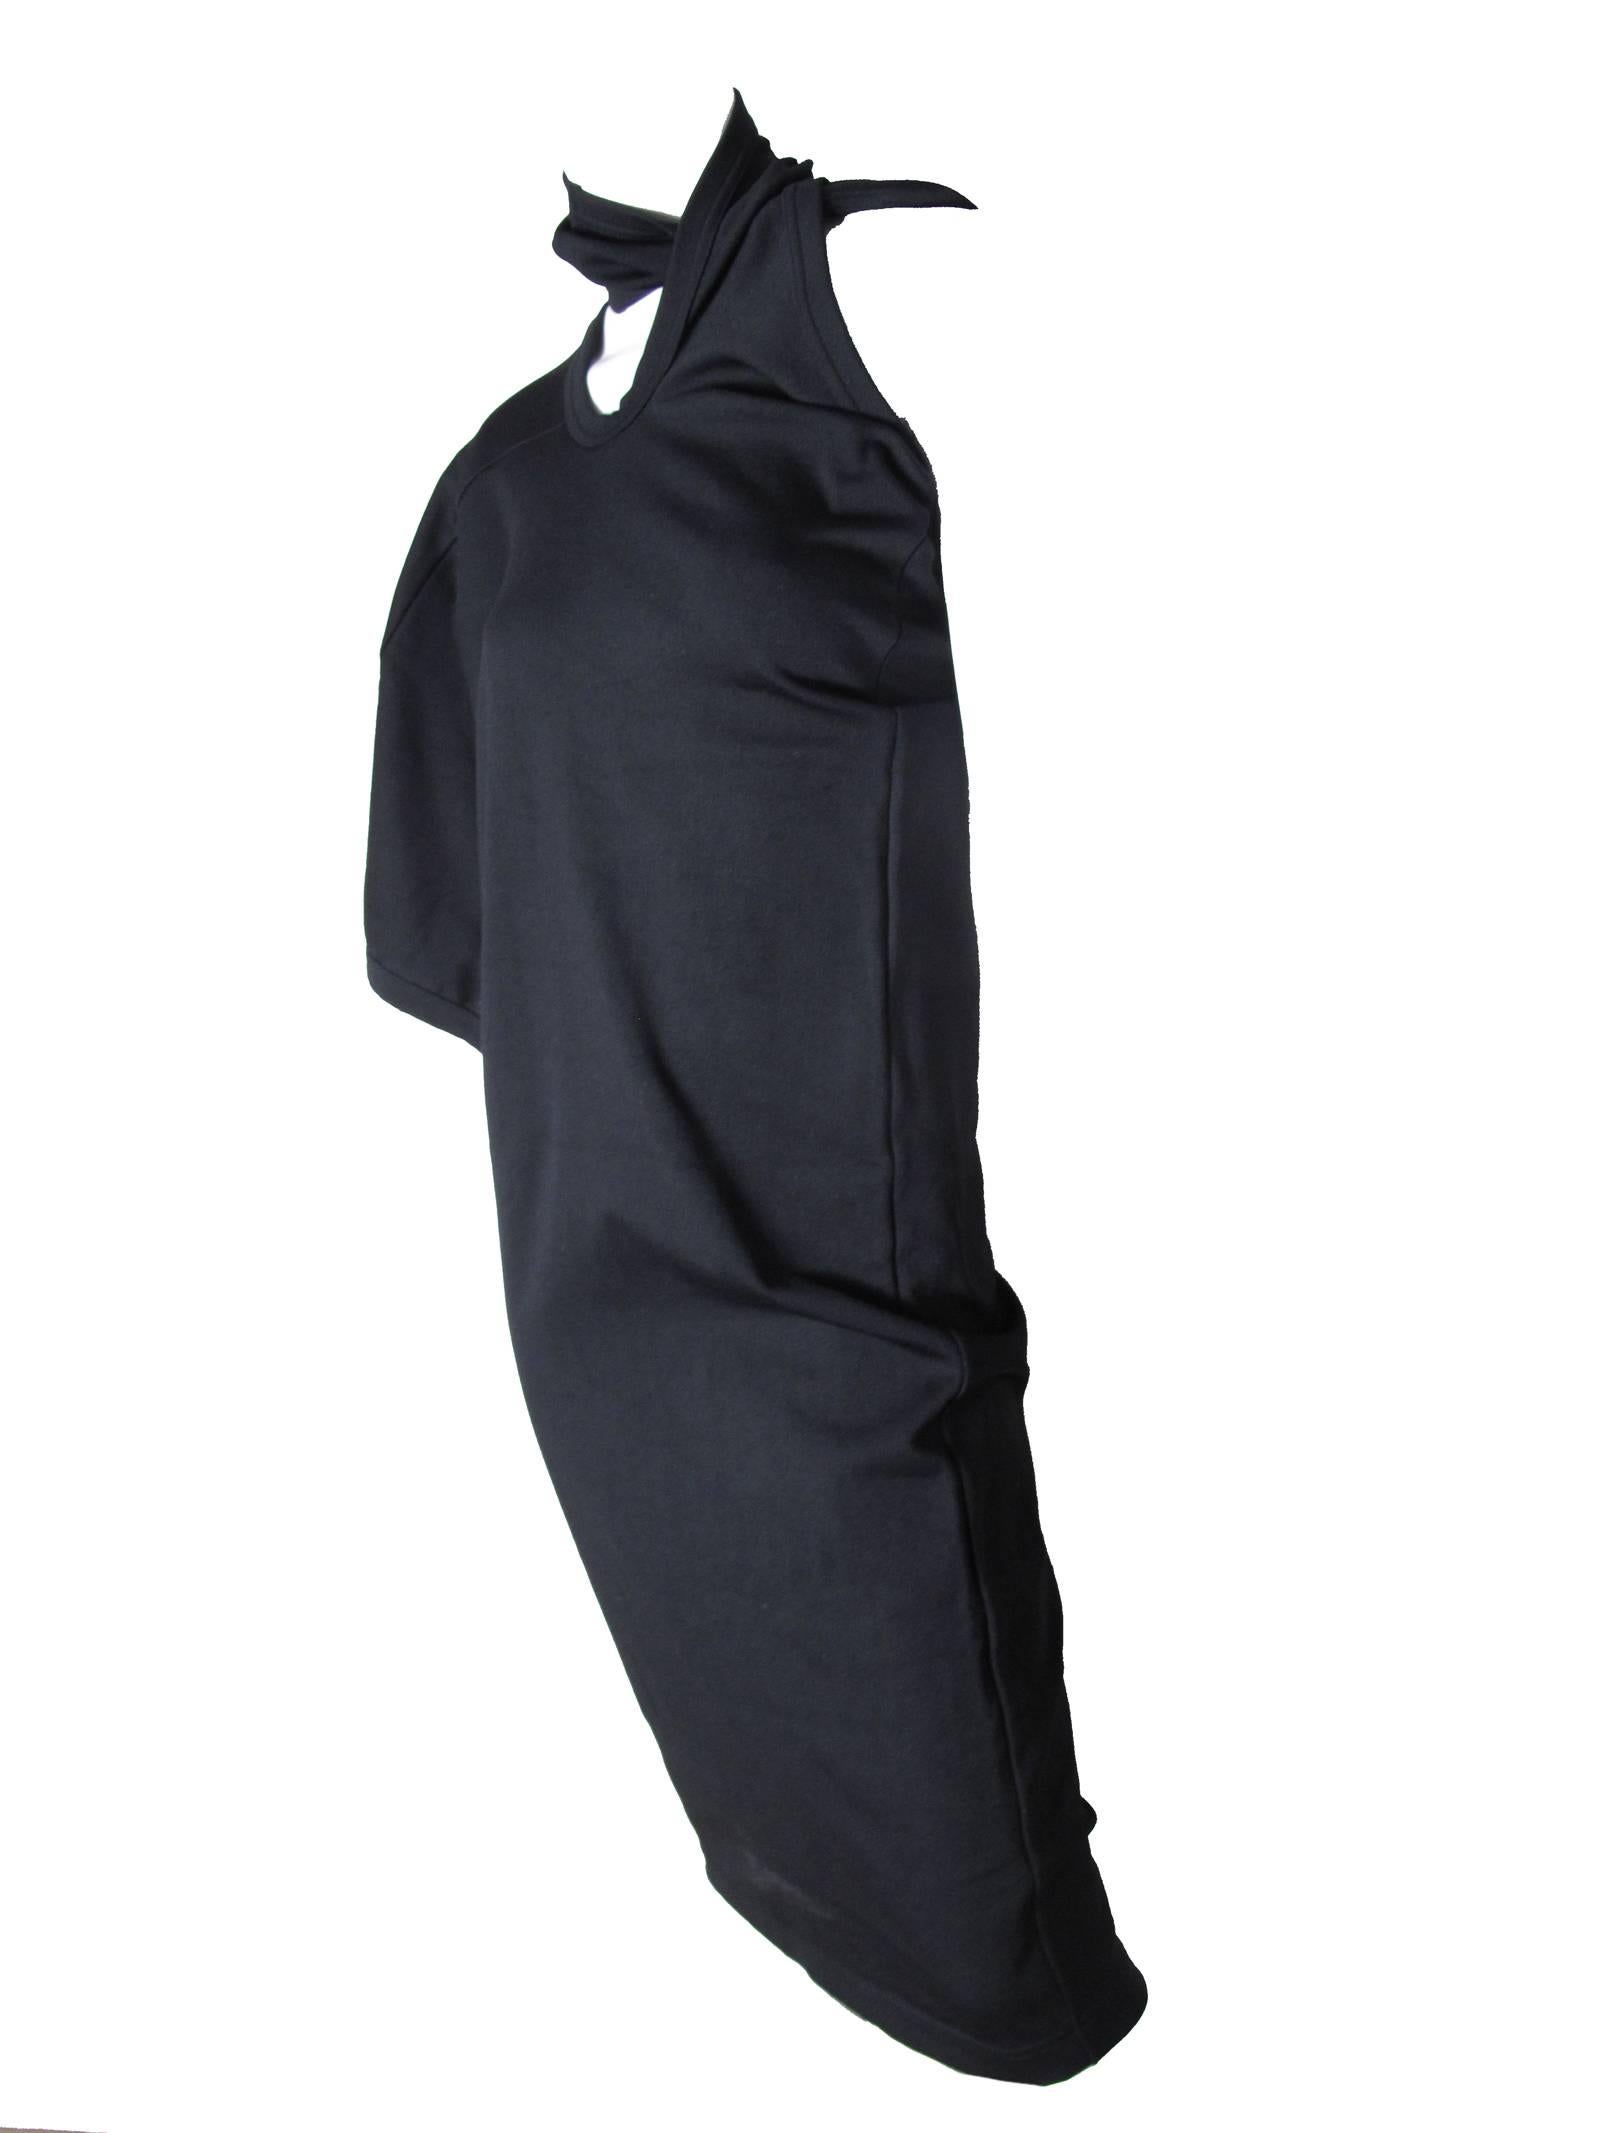 1990 Comme des Garcons black dress with one shoulder.  Nylon and Polyurethane dress. Size M  
Condition: Excellent. 
34